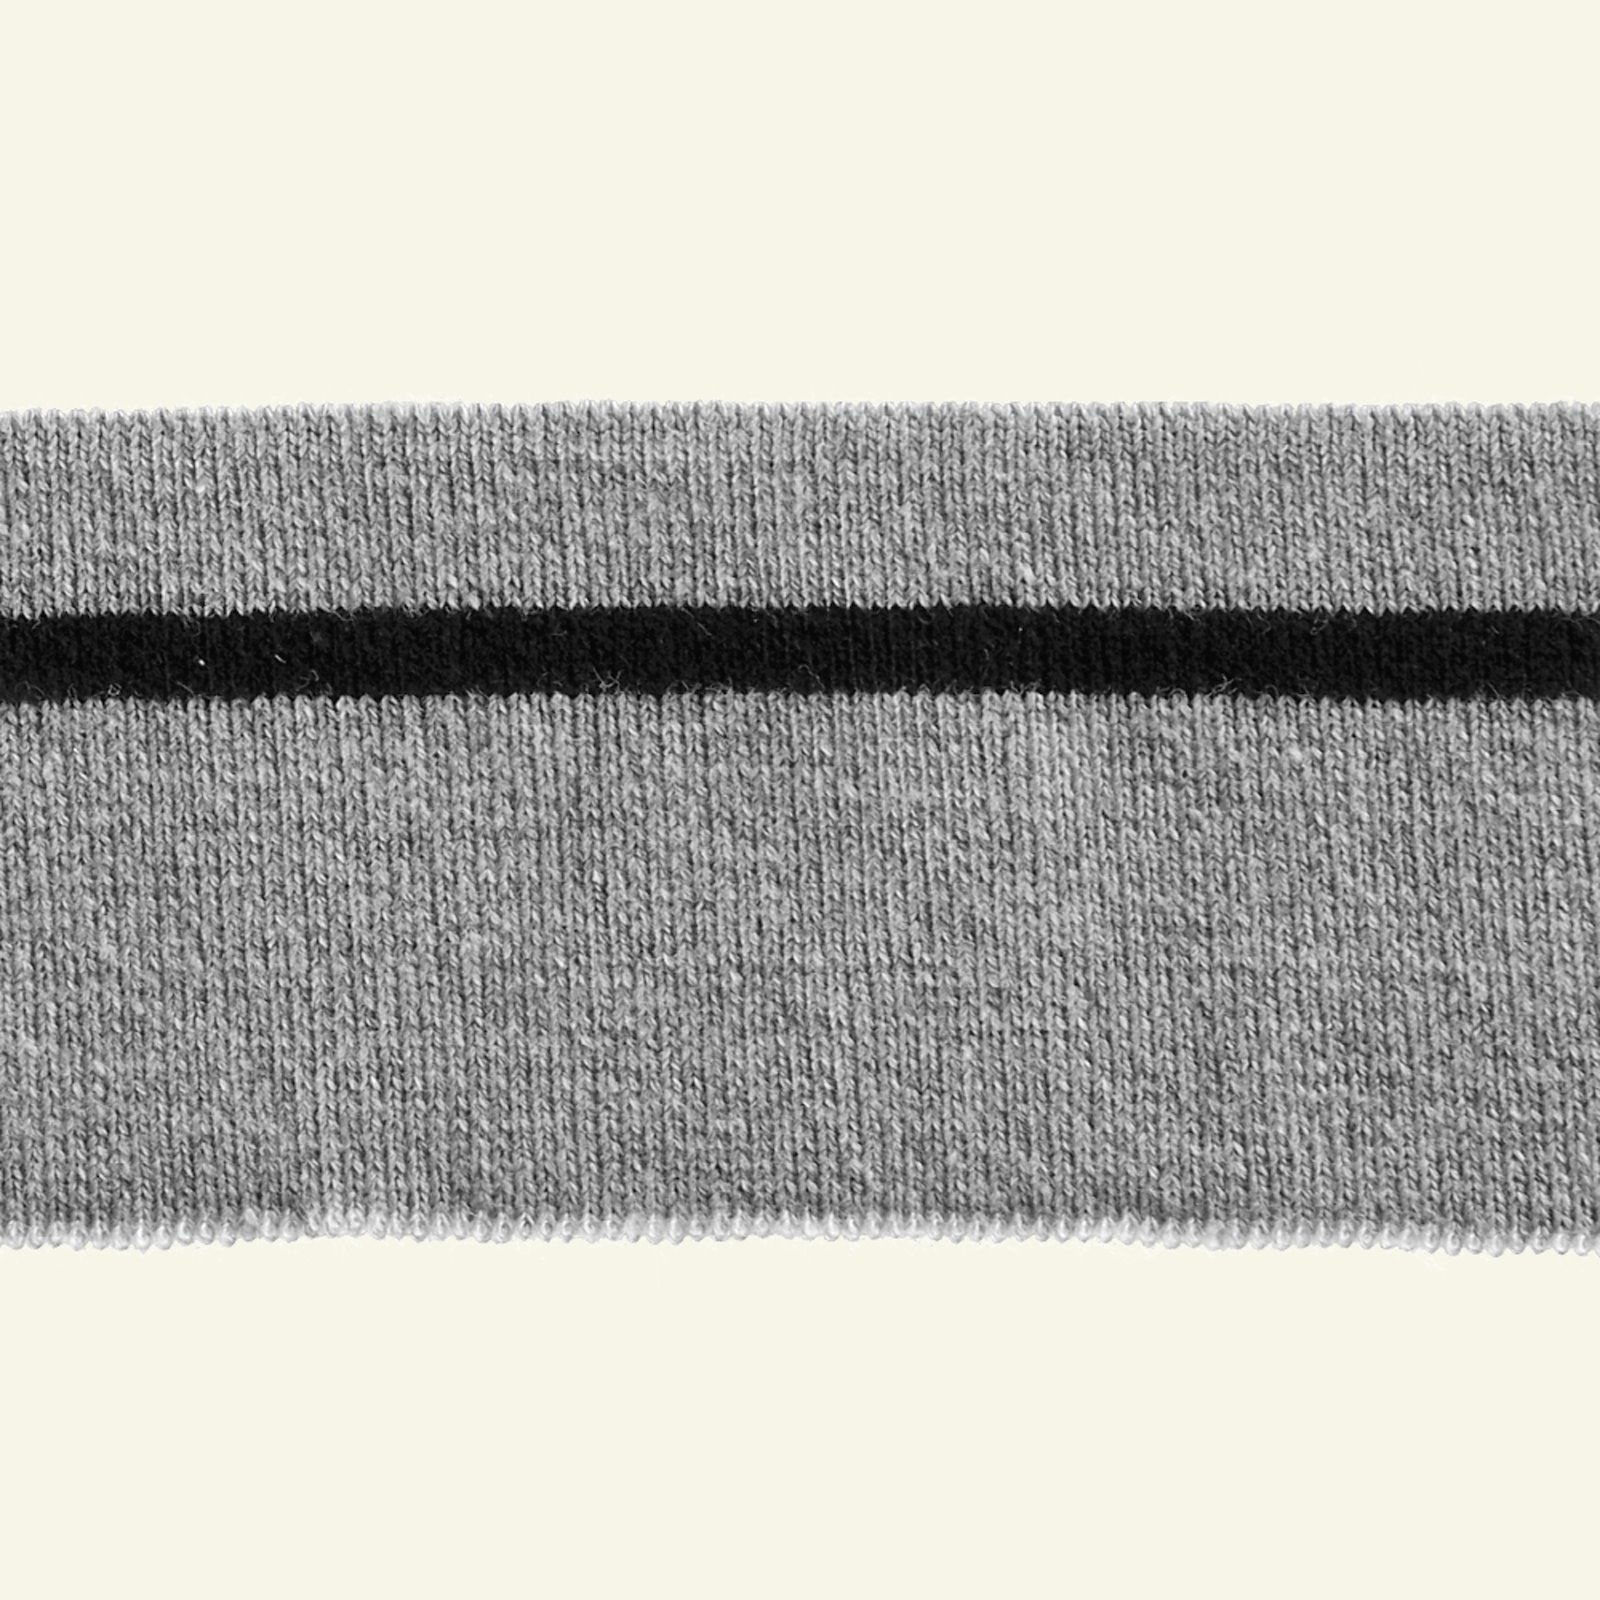 1x1 rib 4,8x100cm grey melange/black 1pc 96112_pack